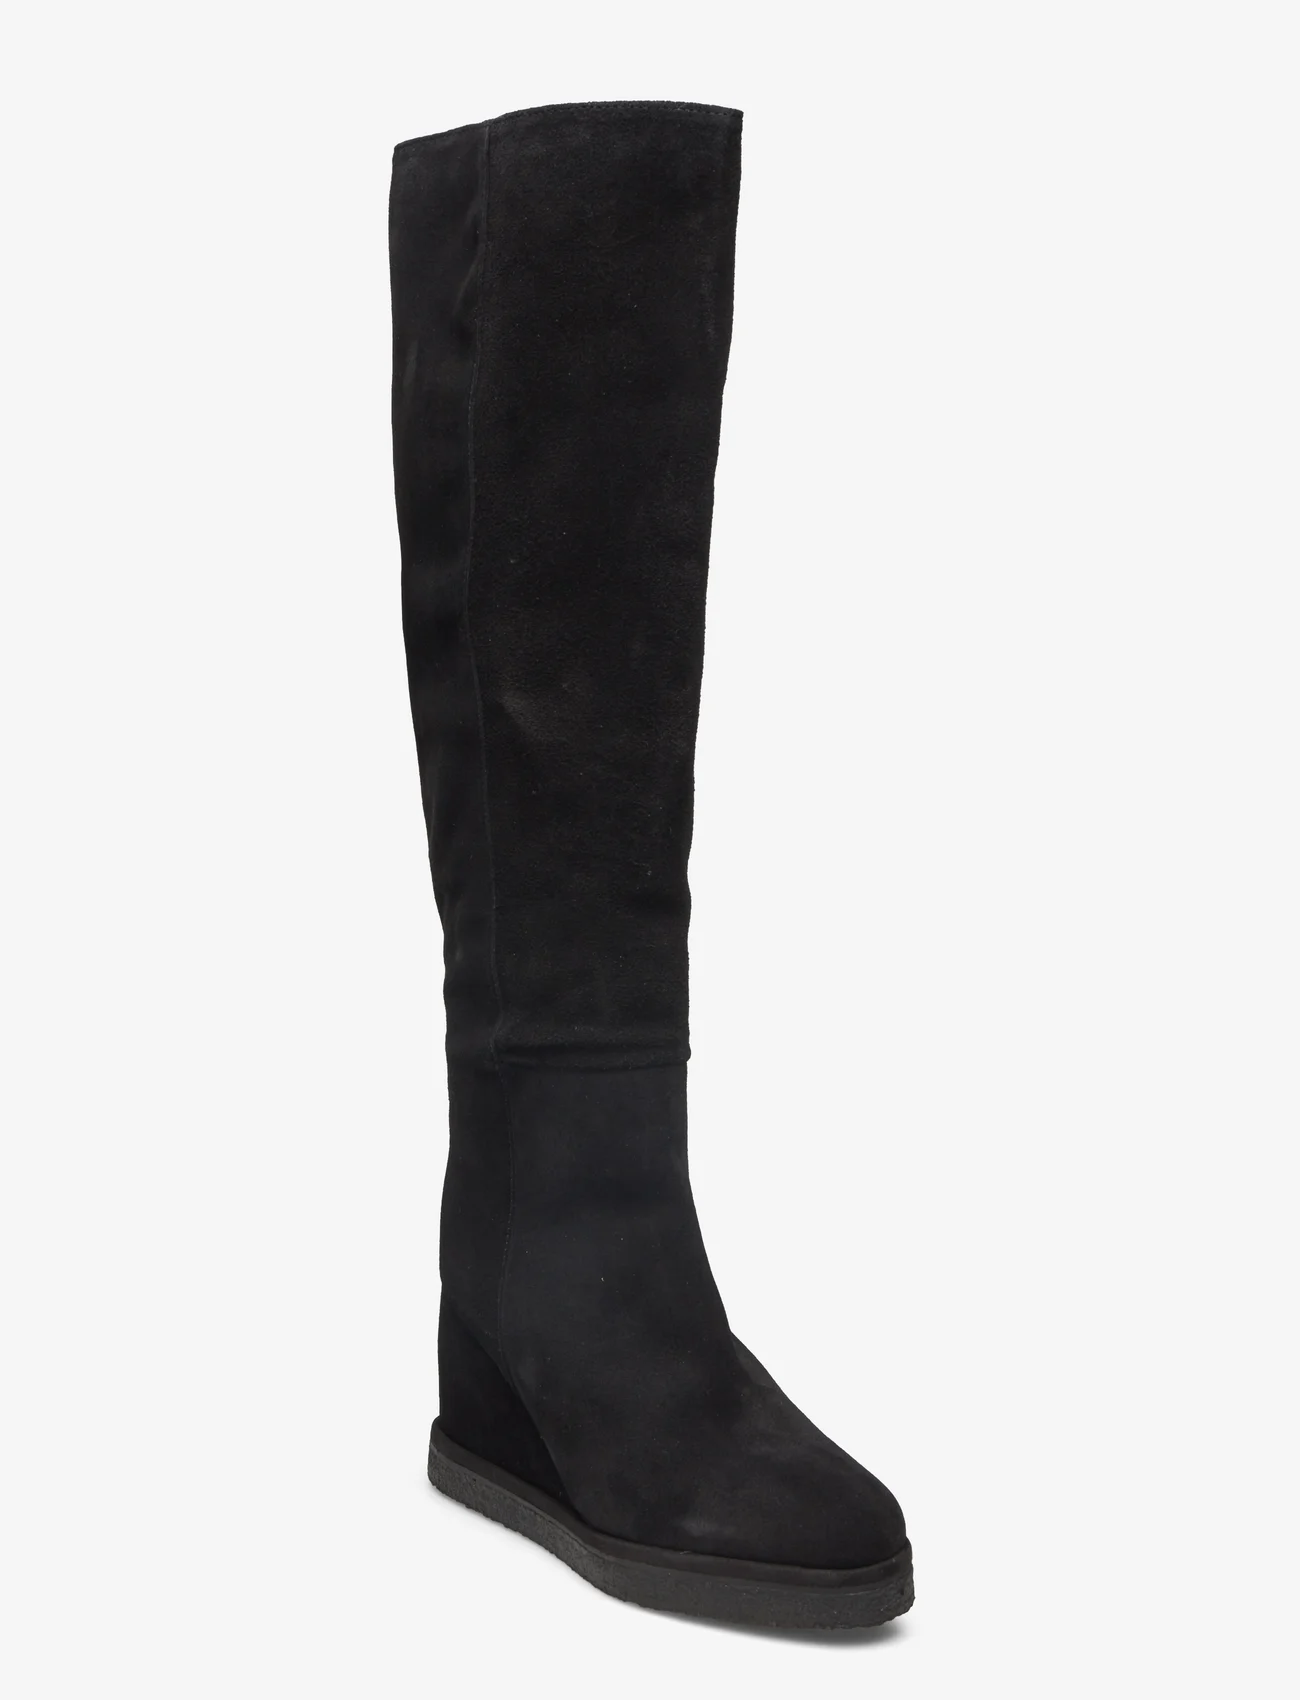 Billi Bi - Long Boots - kniehohe stiefel - black suede/black sole - 0